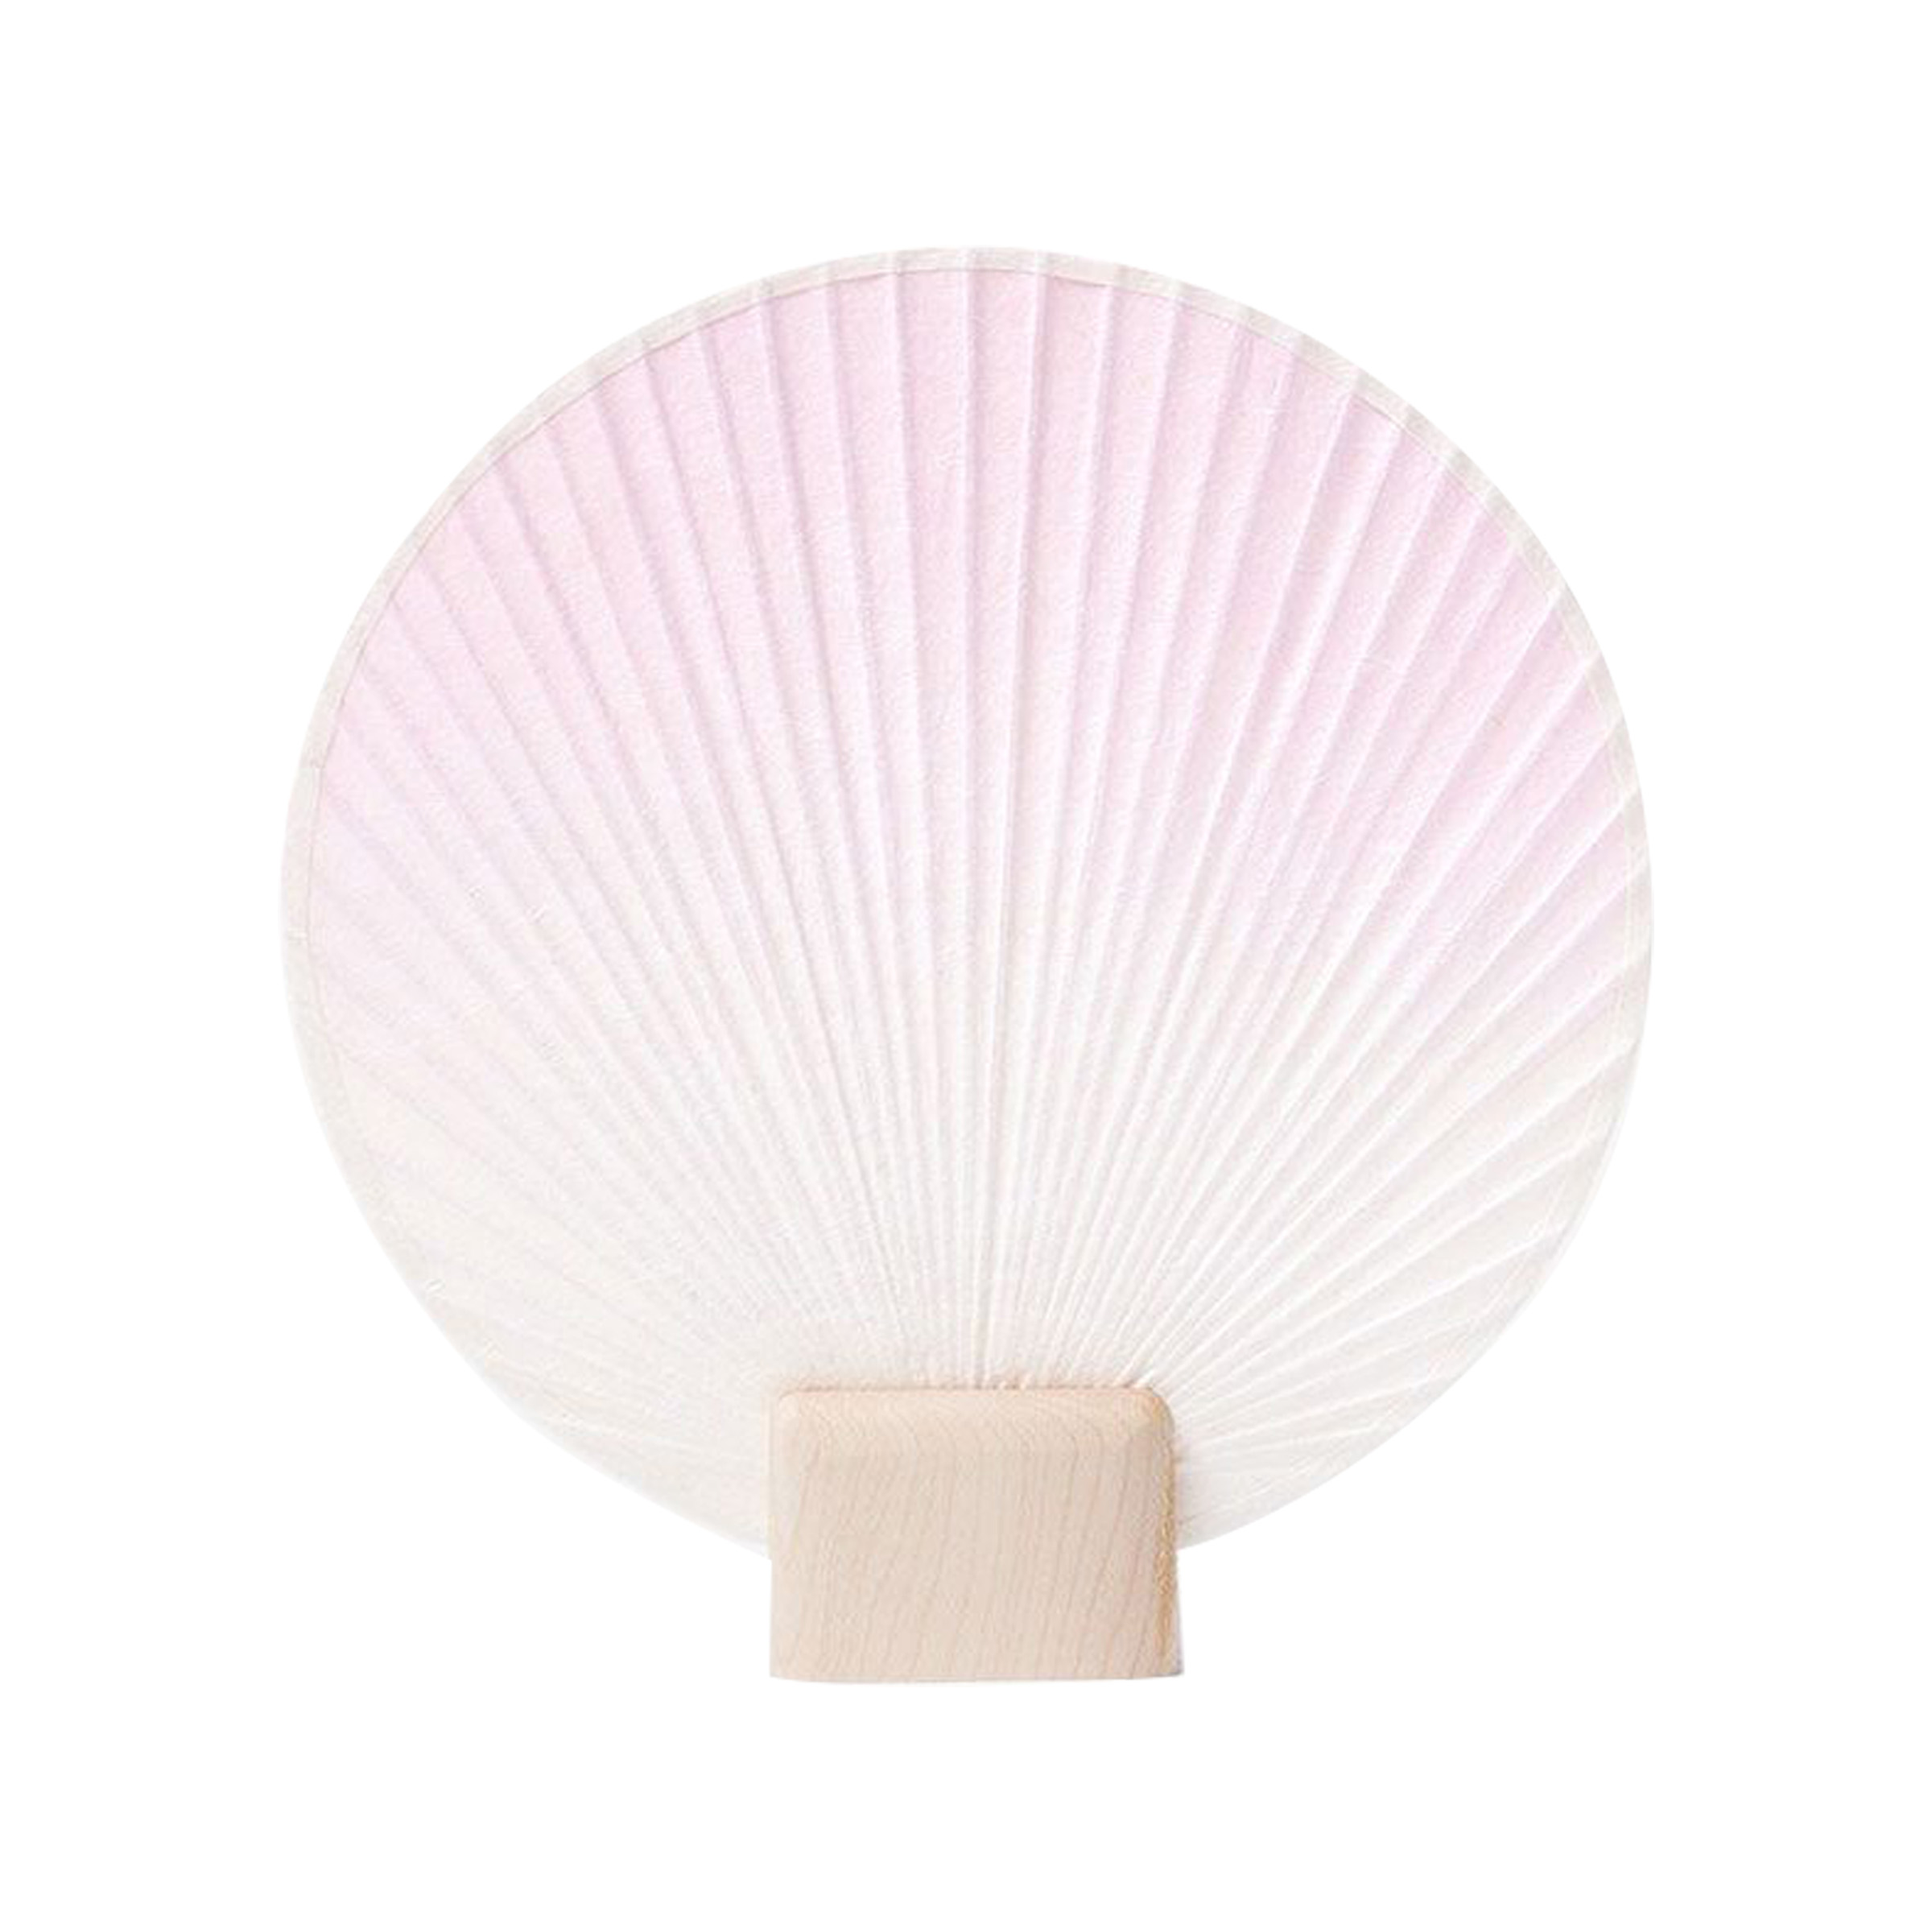 KHJ Studio Hand Crafted Fan Round Medium in Pink